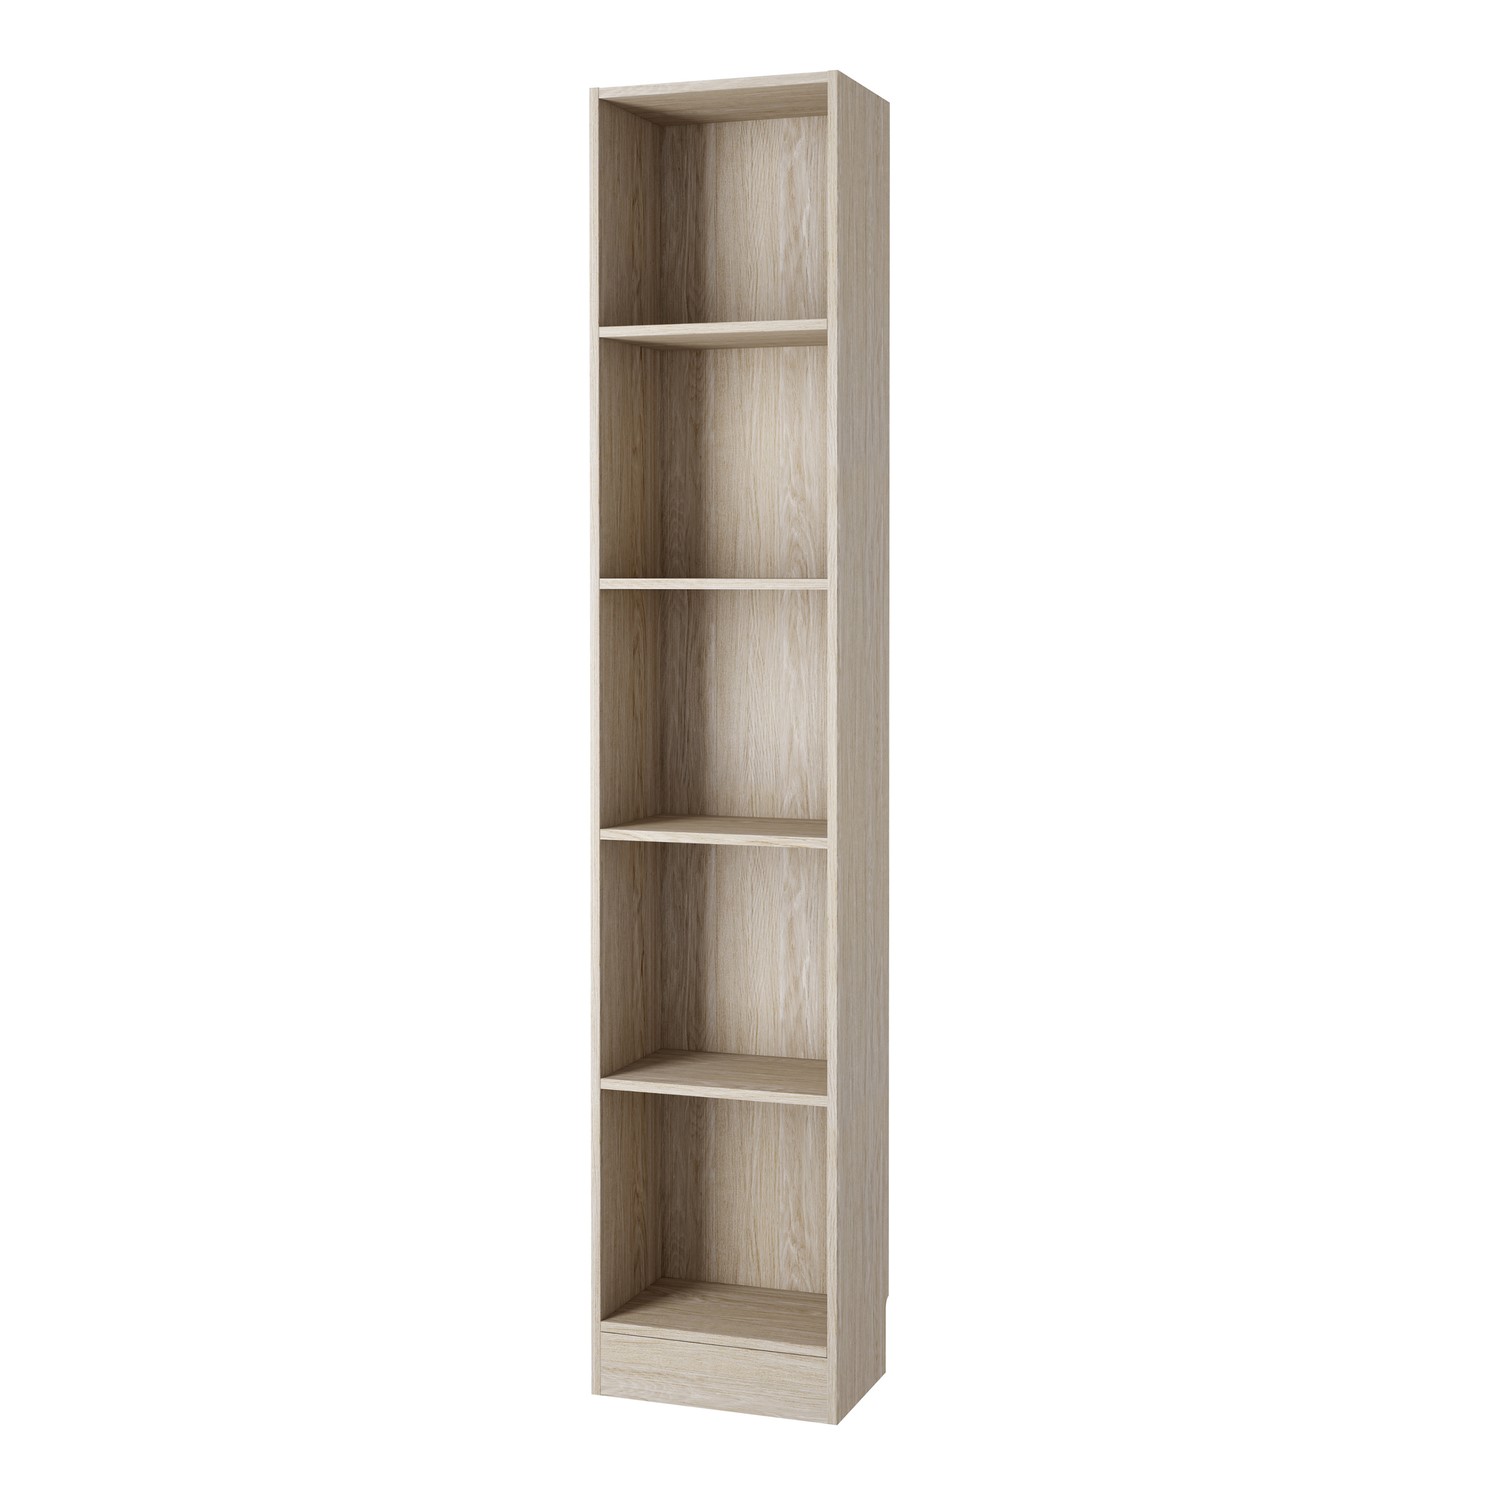 Photo of Tall and narrow oak bookcase - basic